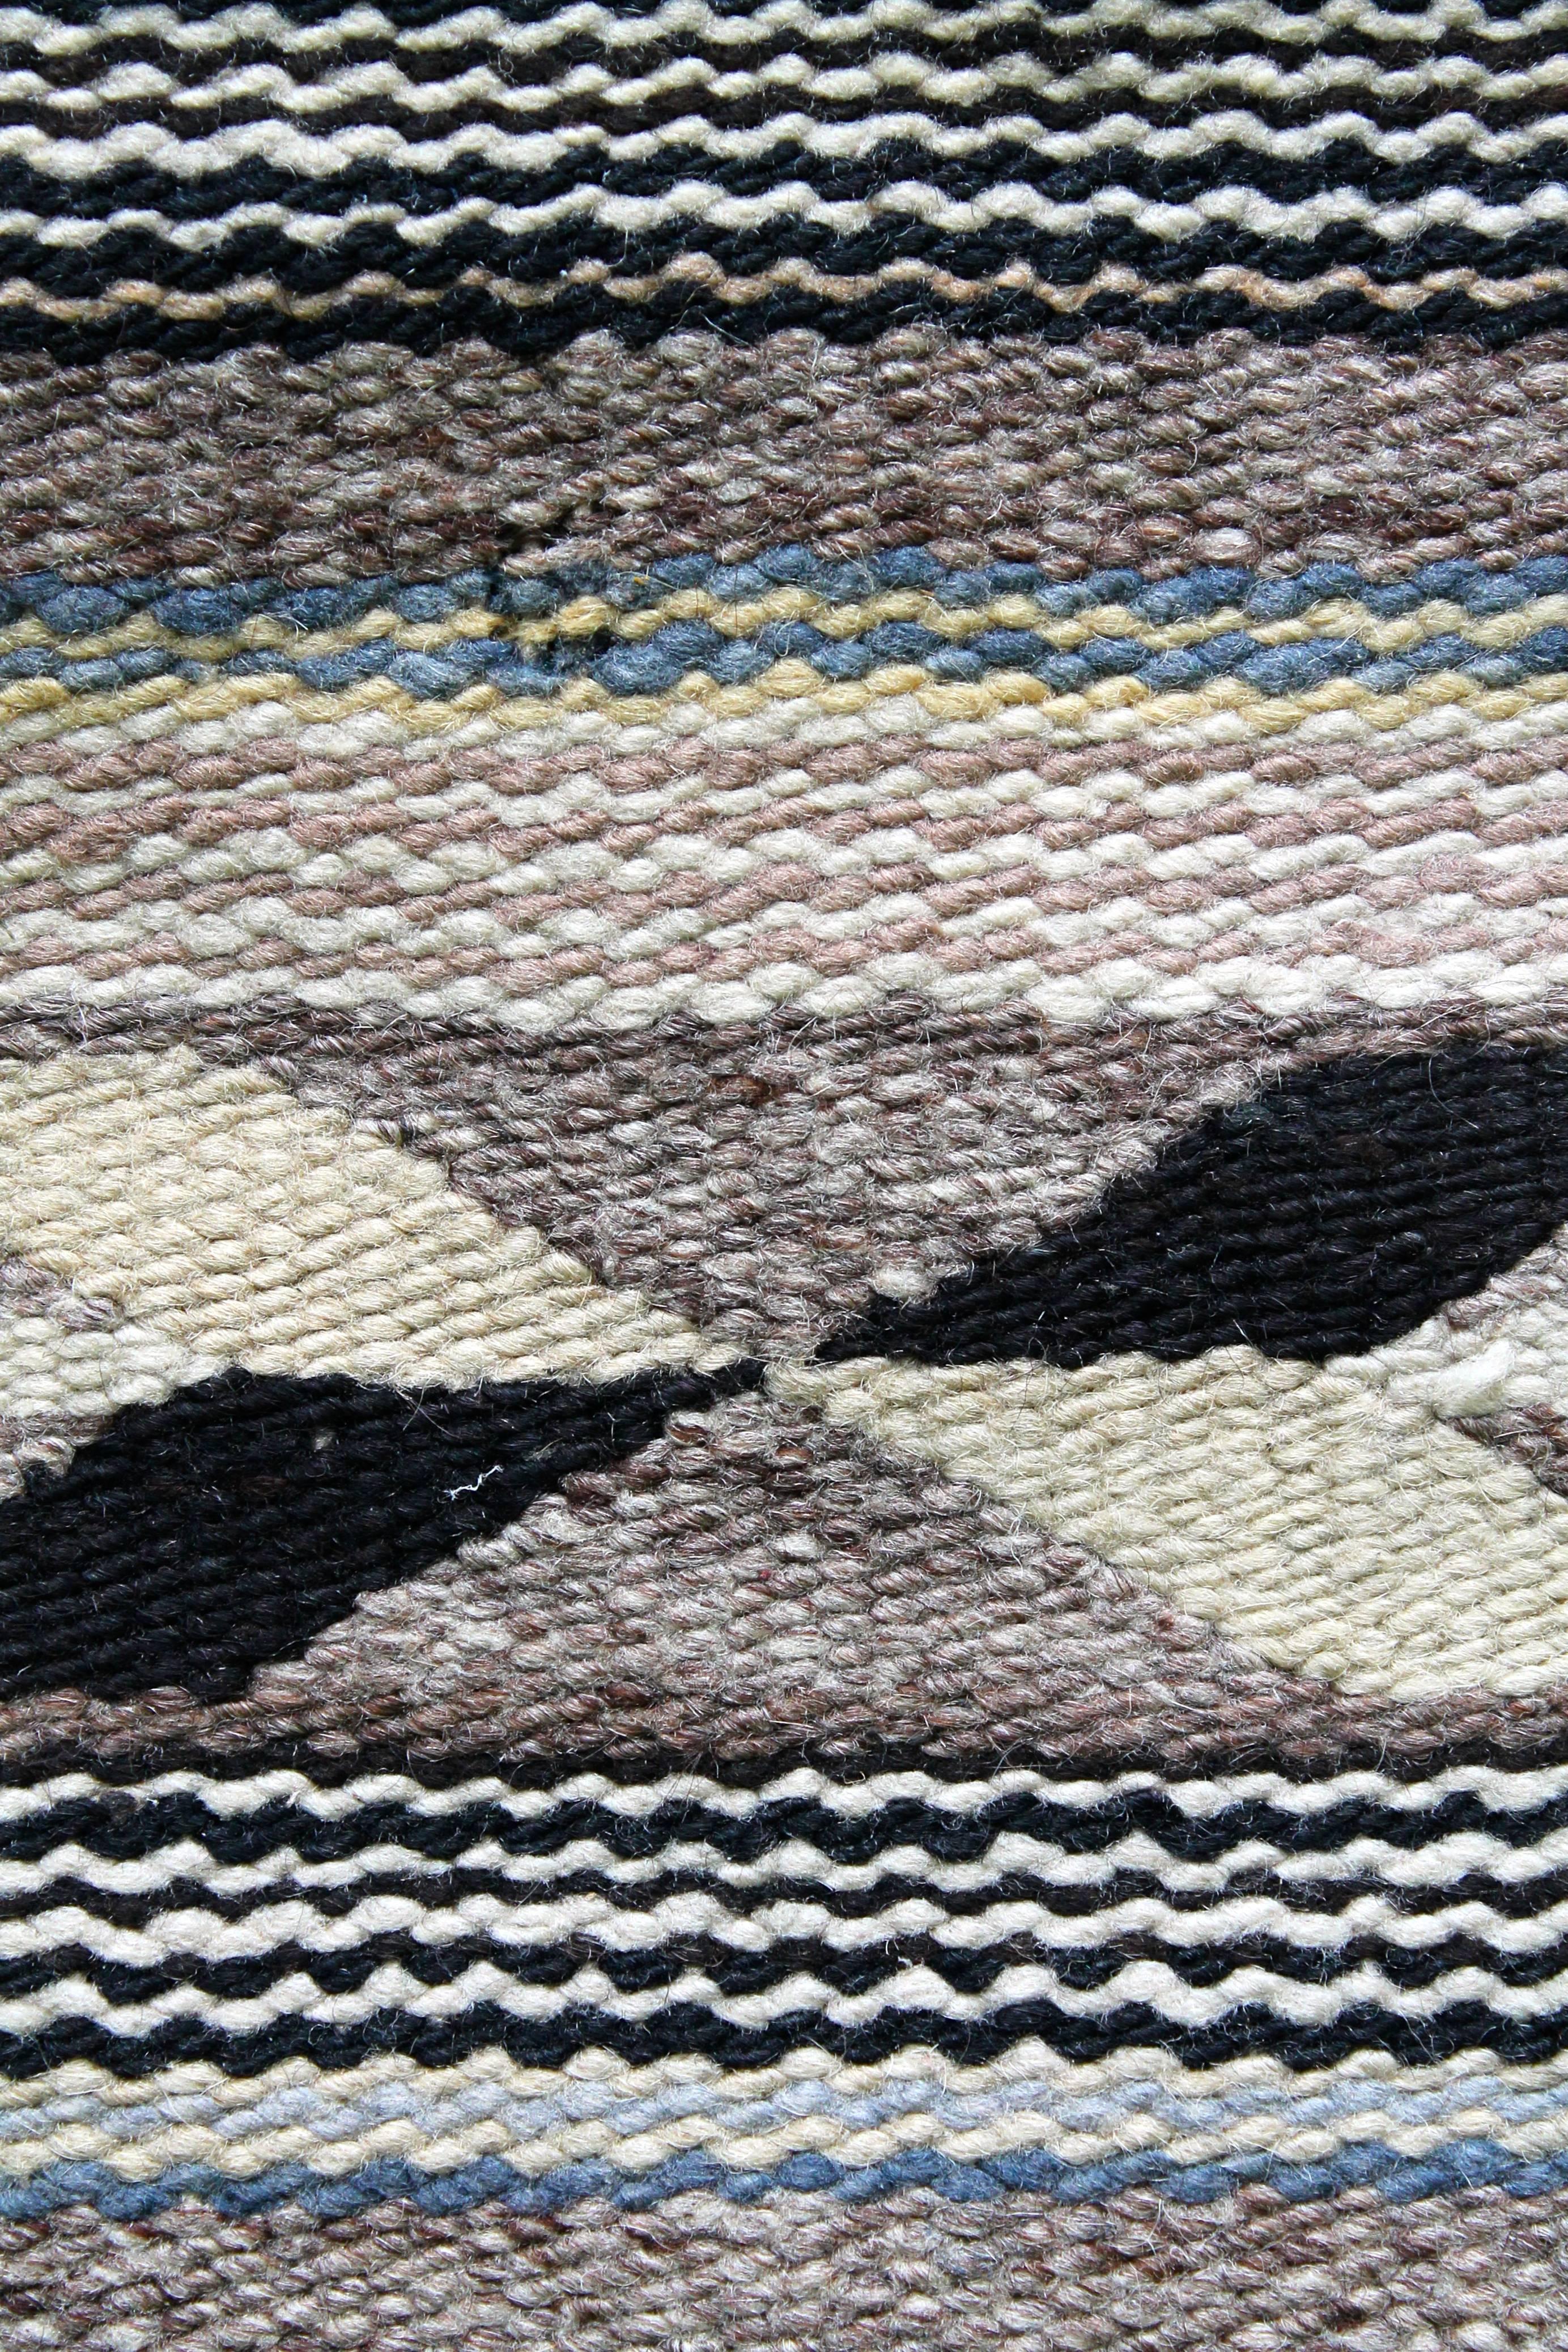 Late 19th Century Navajo Child's Blanket